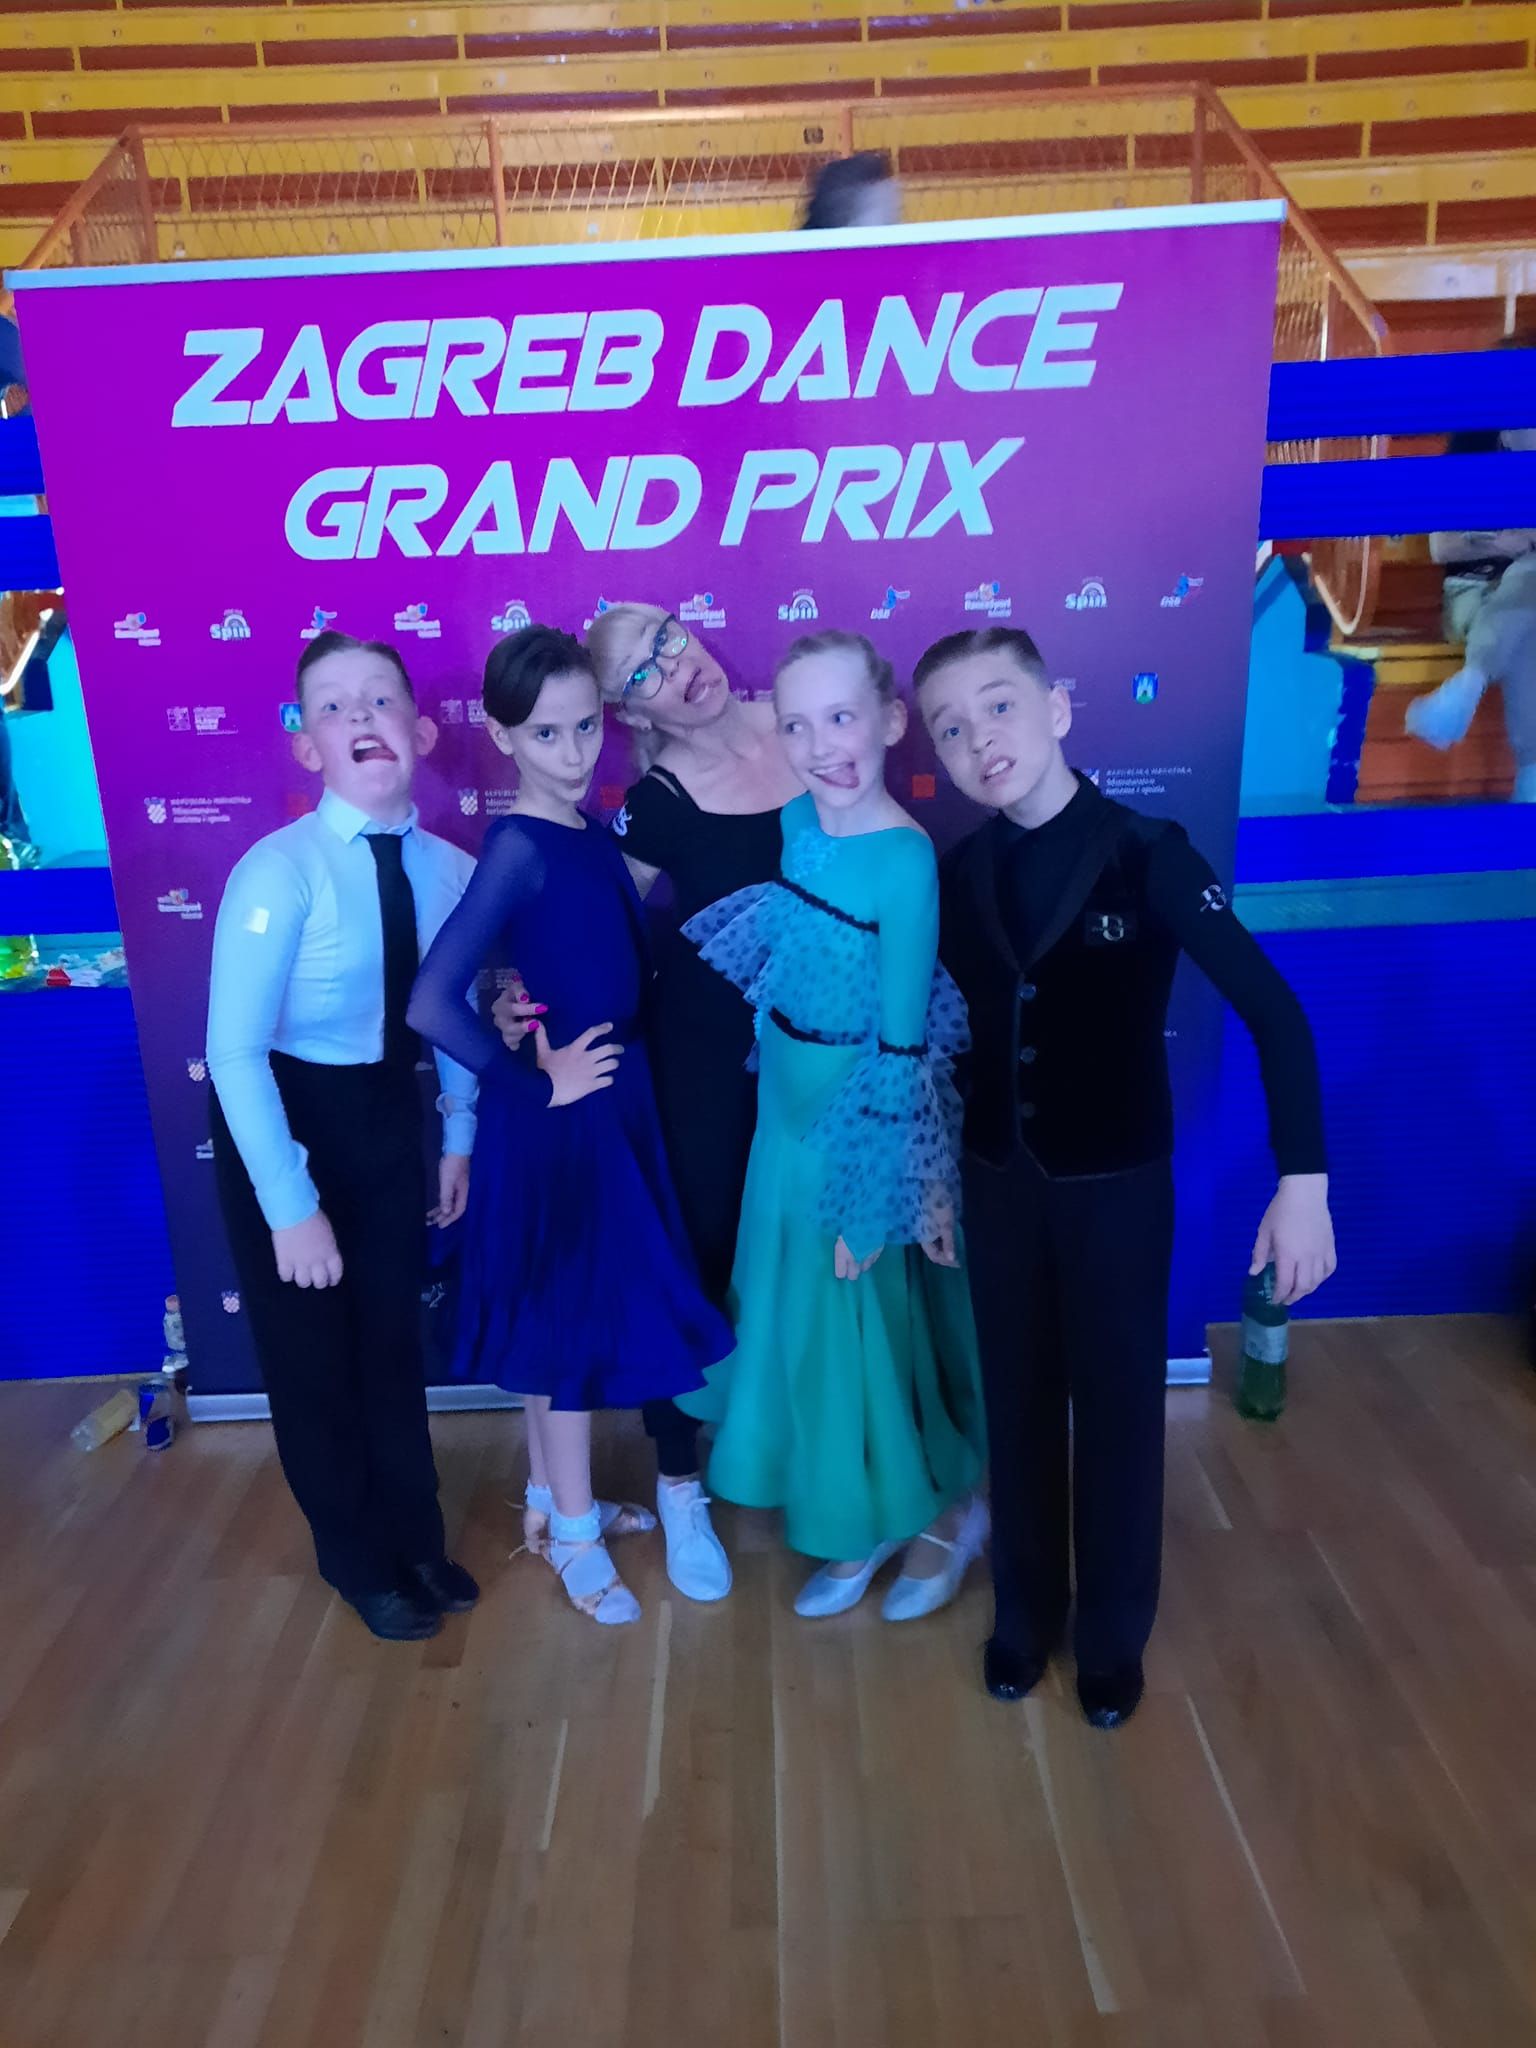 Zagrzeb dance grand prix  🏆